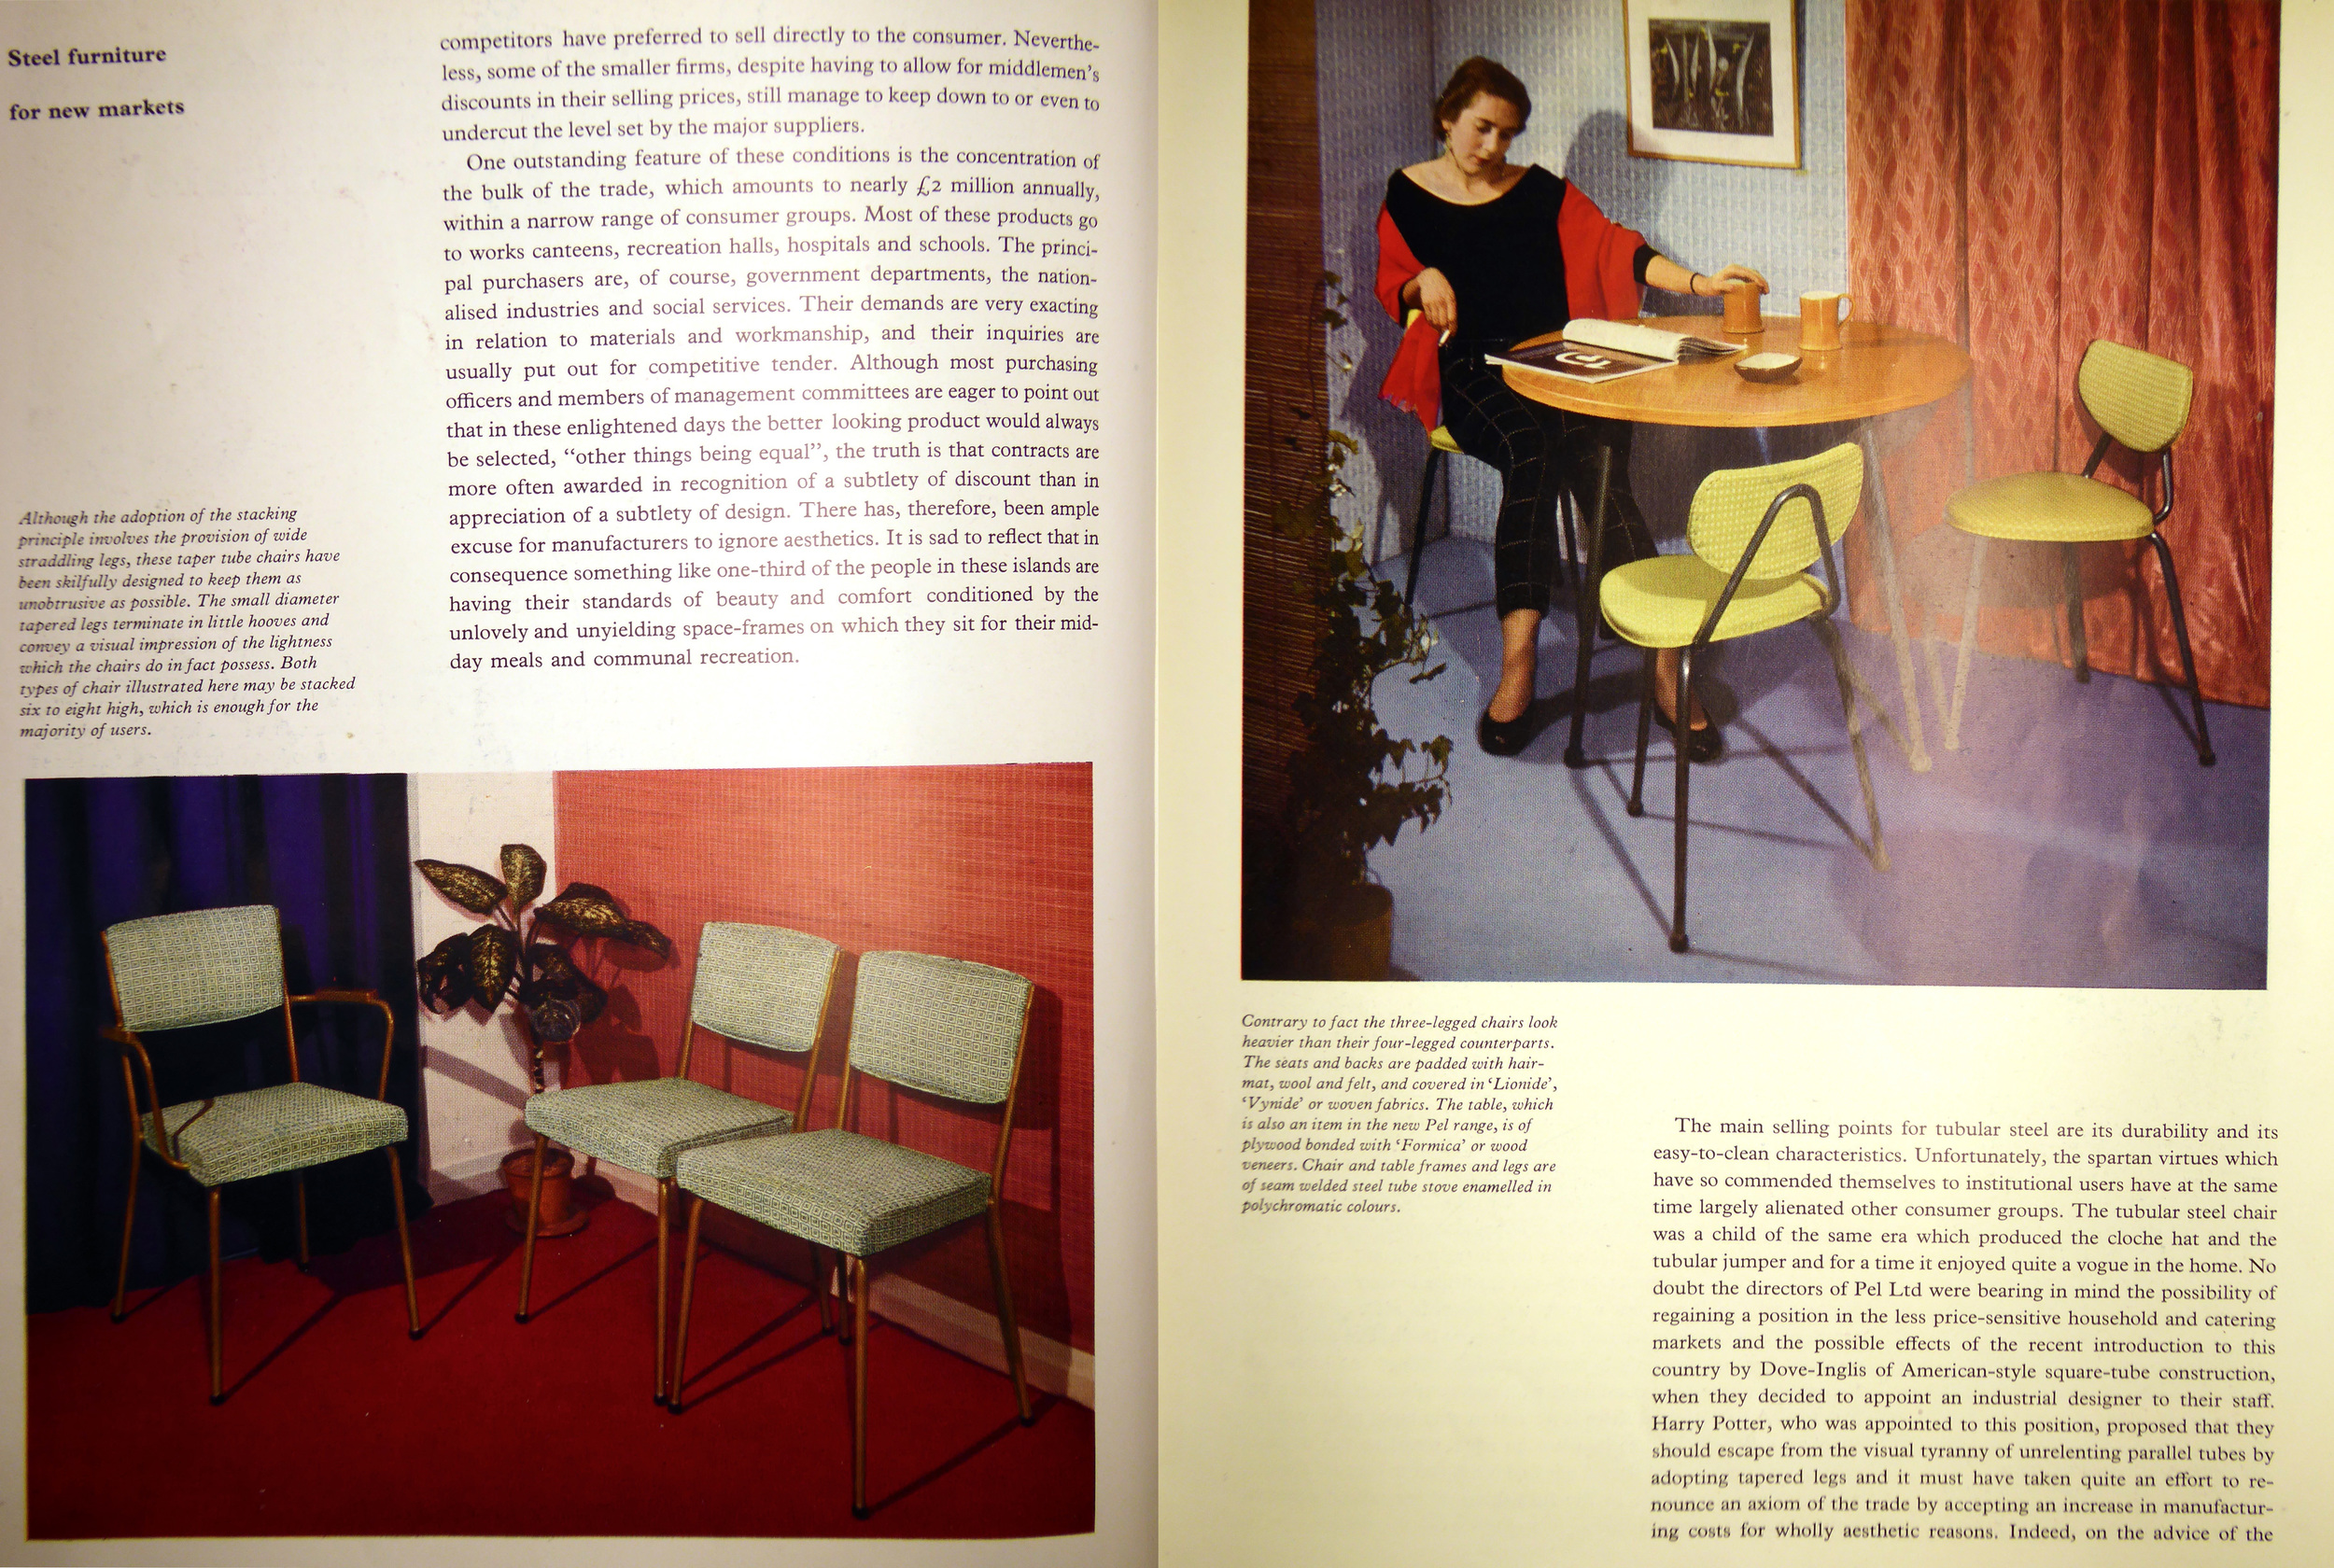 DDR_Steel-Furniture-for-New-Markets_Jan_1956.jpg